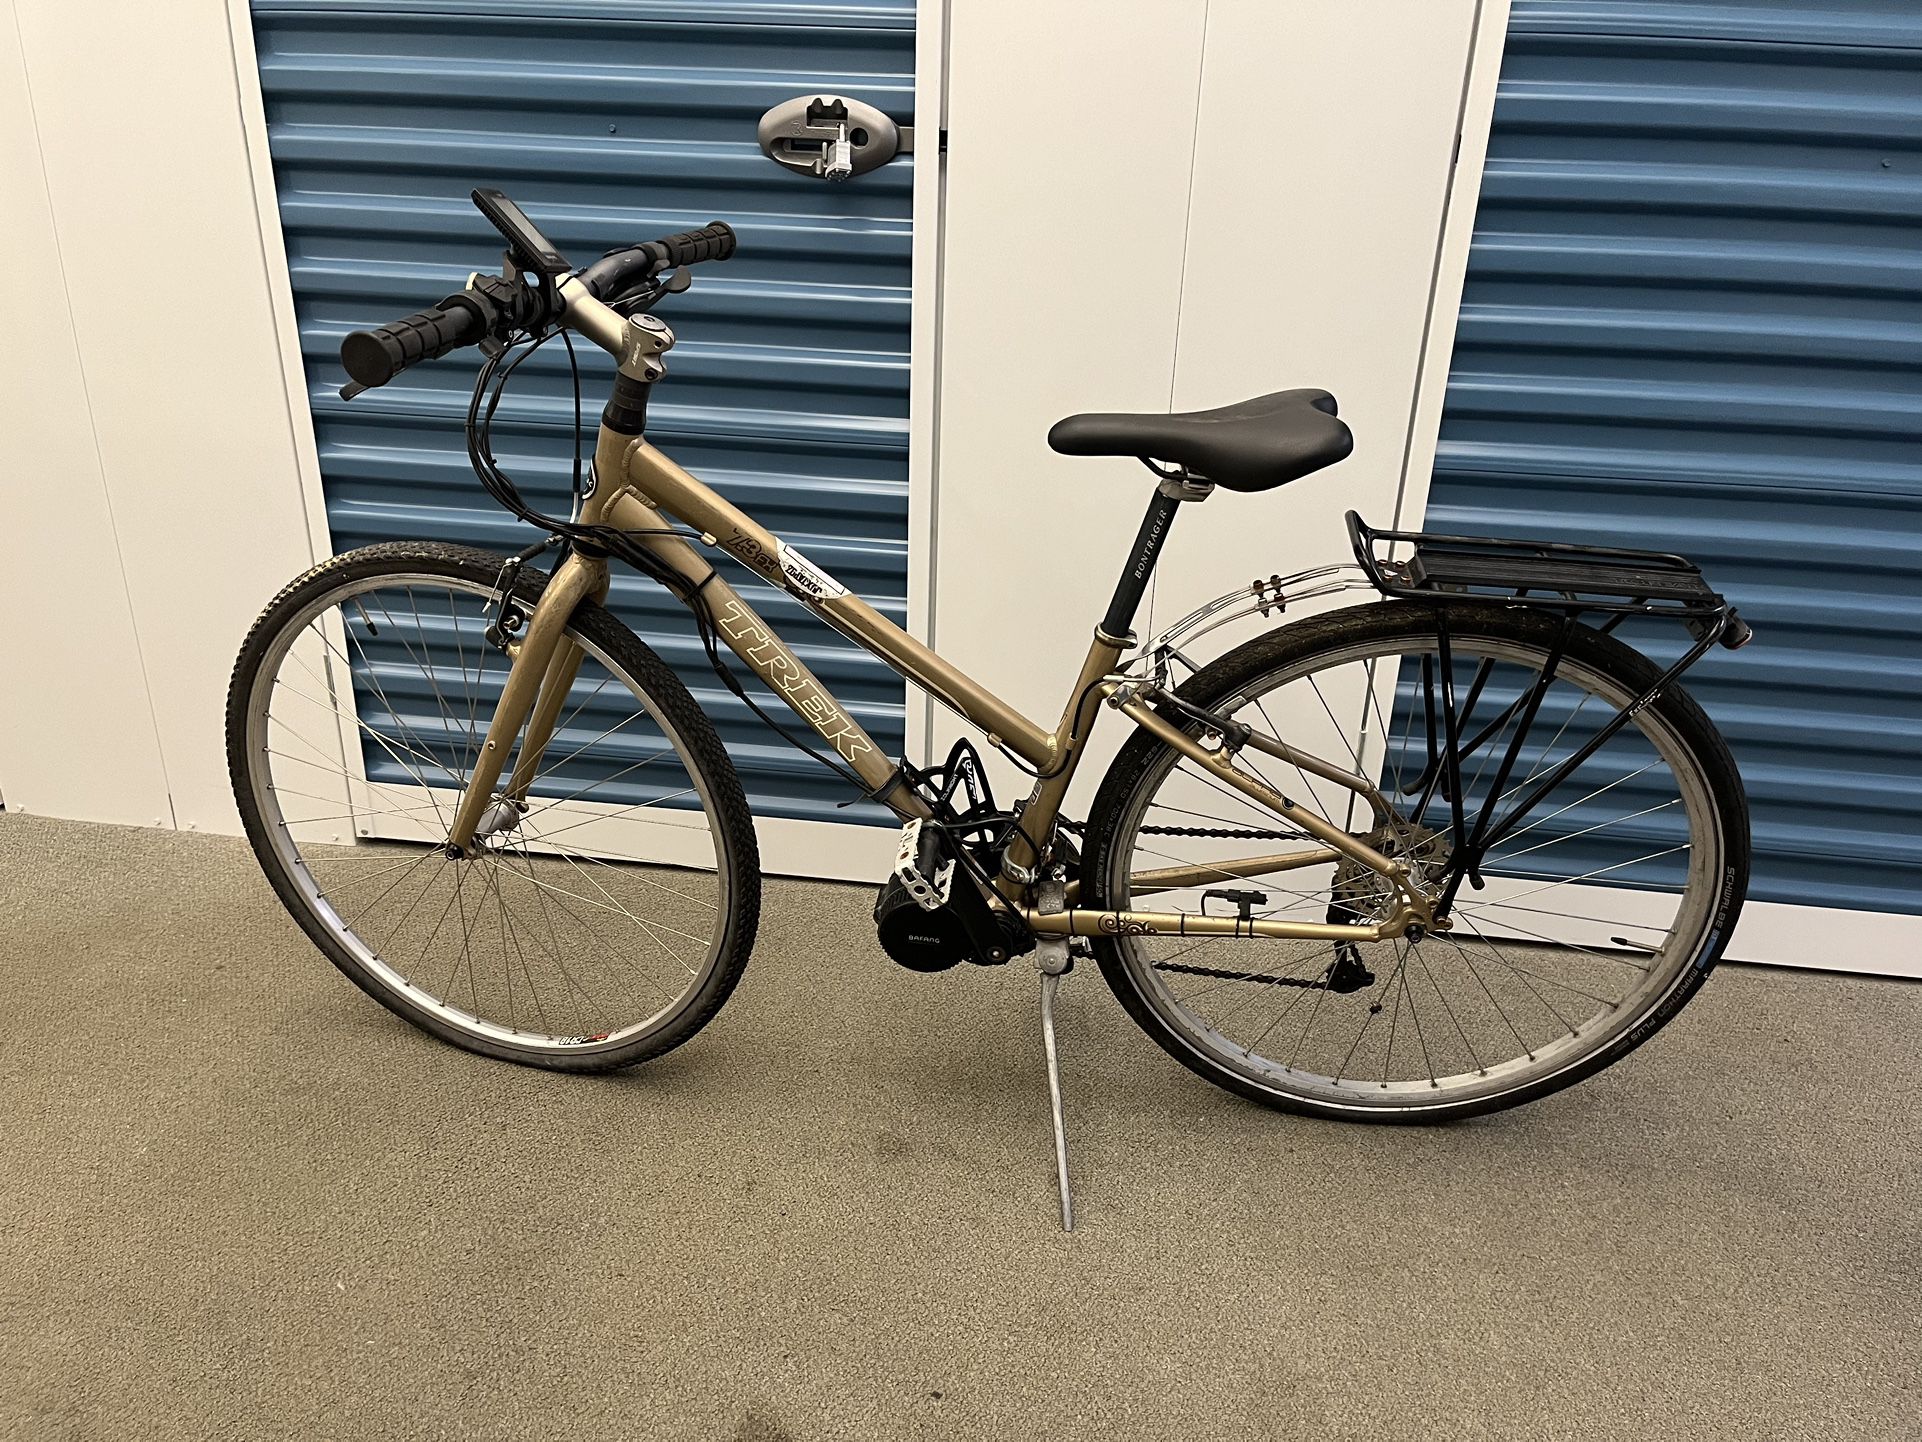 Trek Bike With Electric Bike Added (no Battery) 